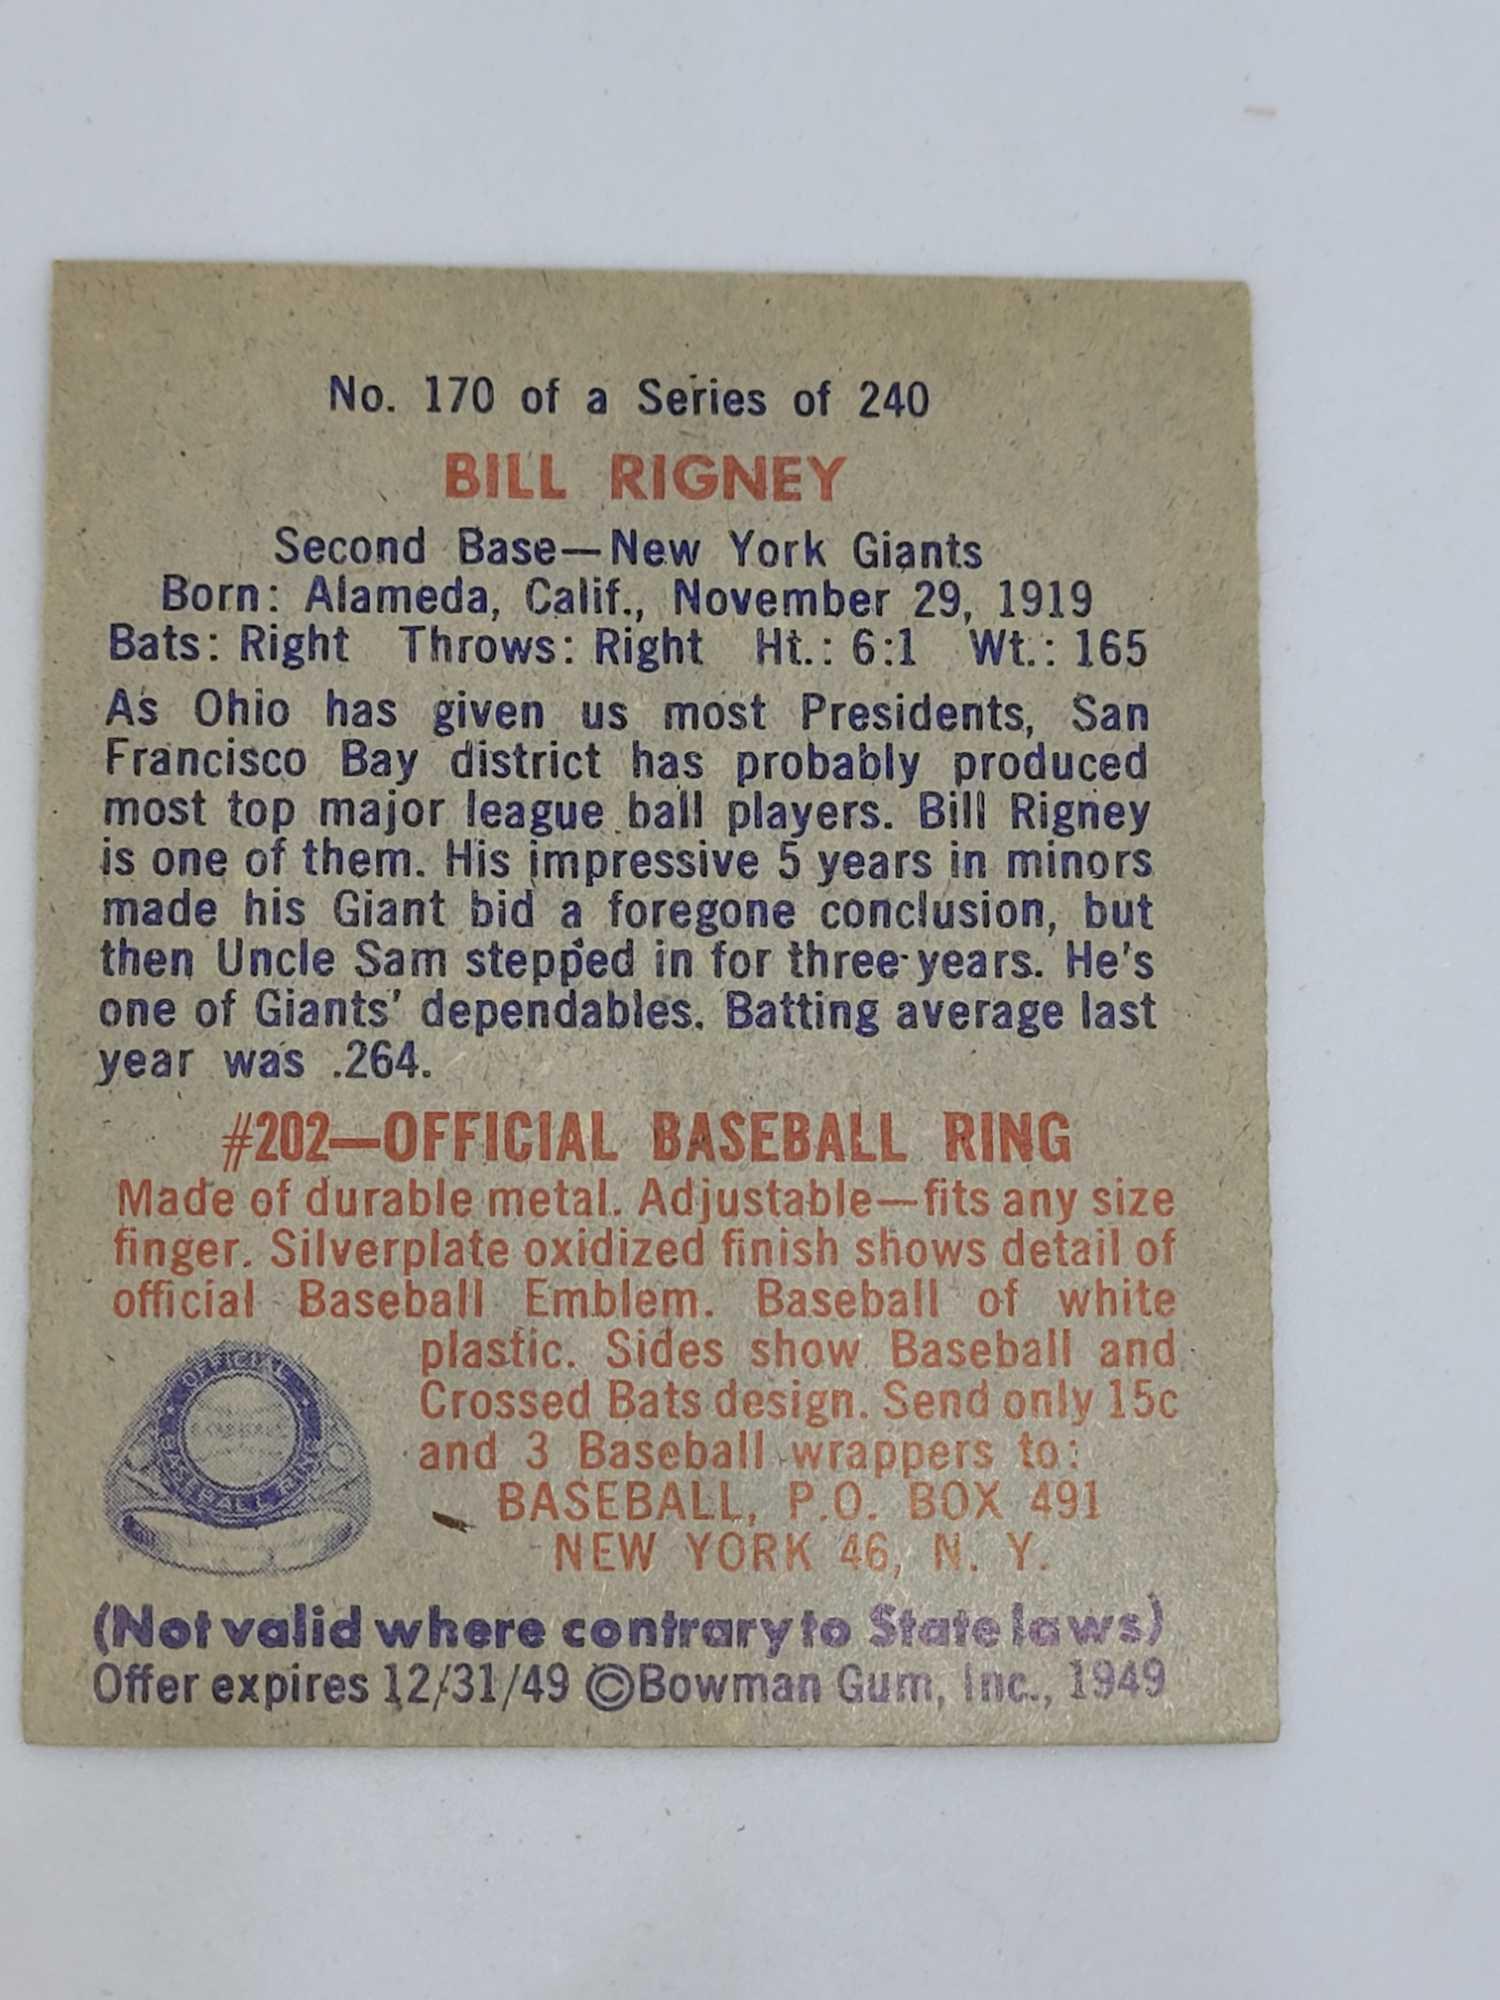 Five 1949 Bowman baseball cards